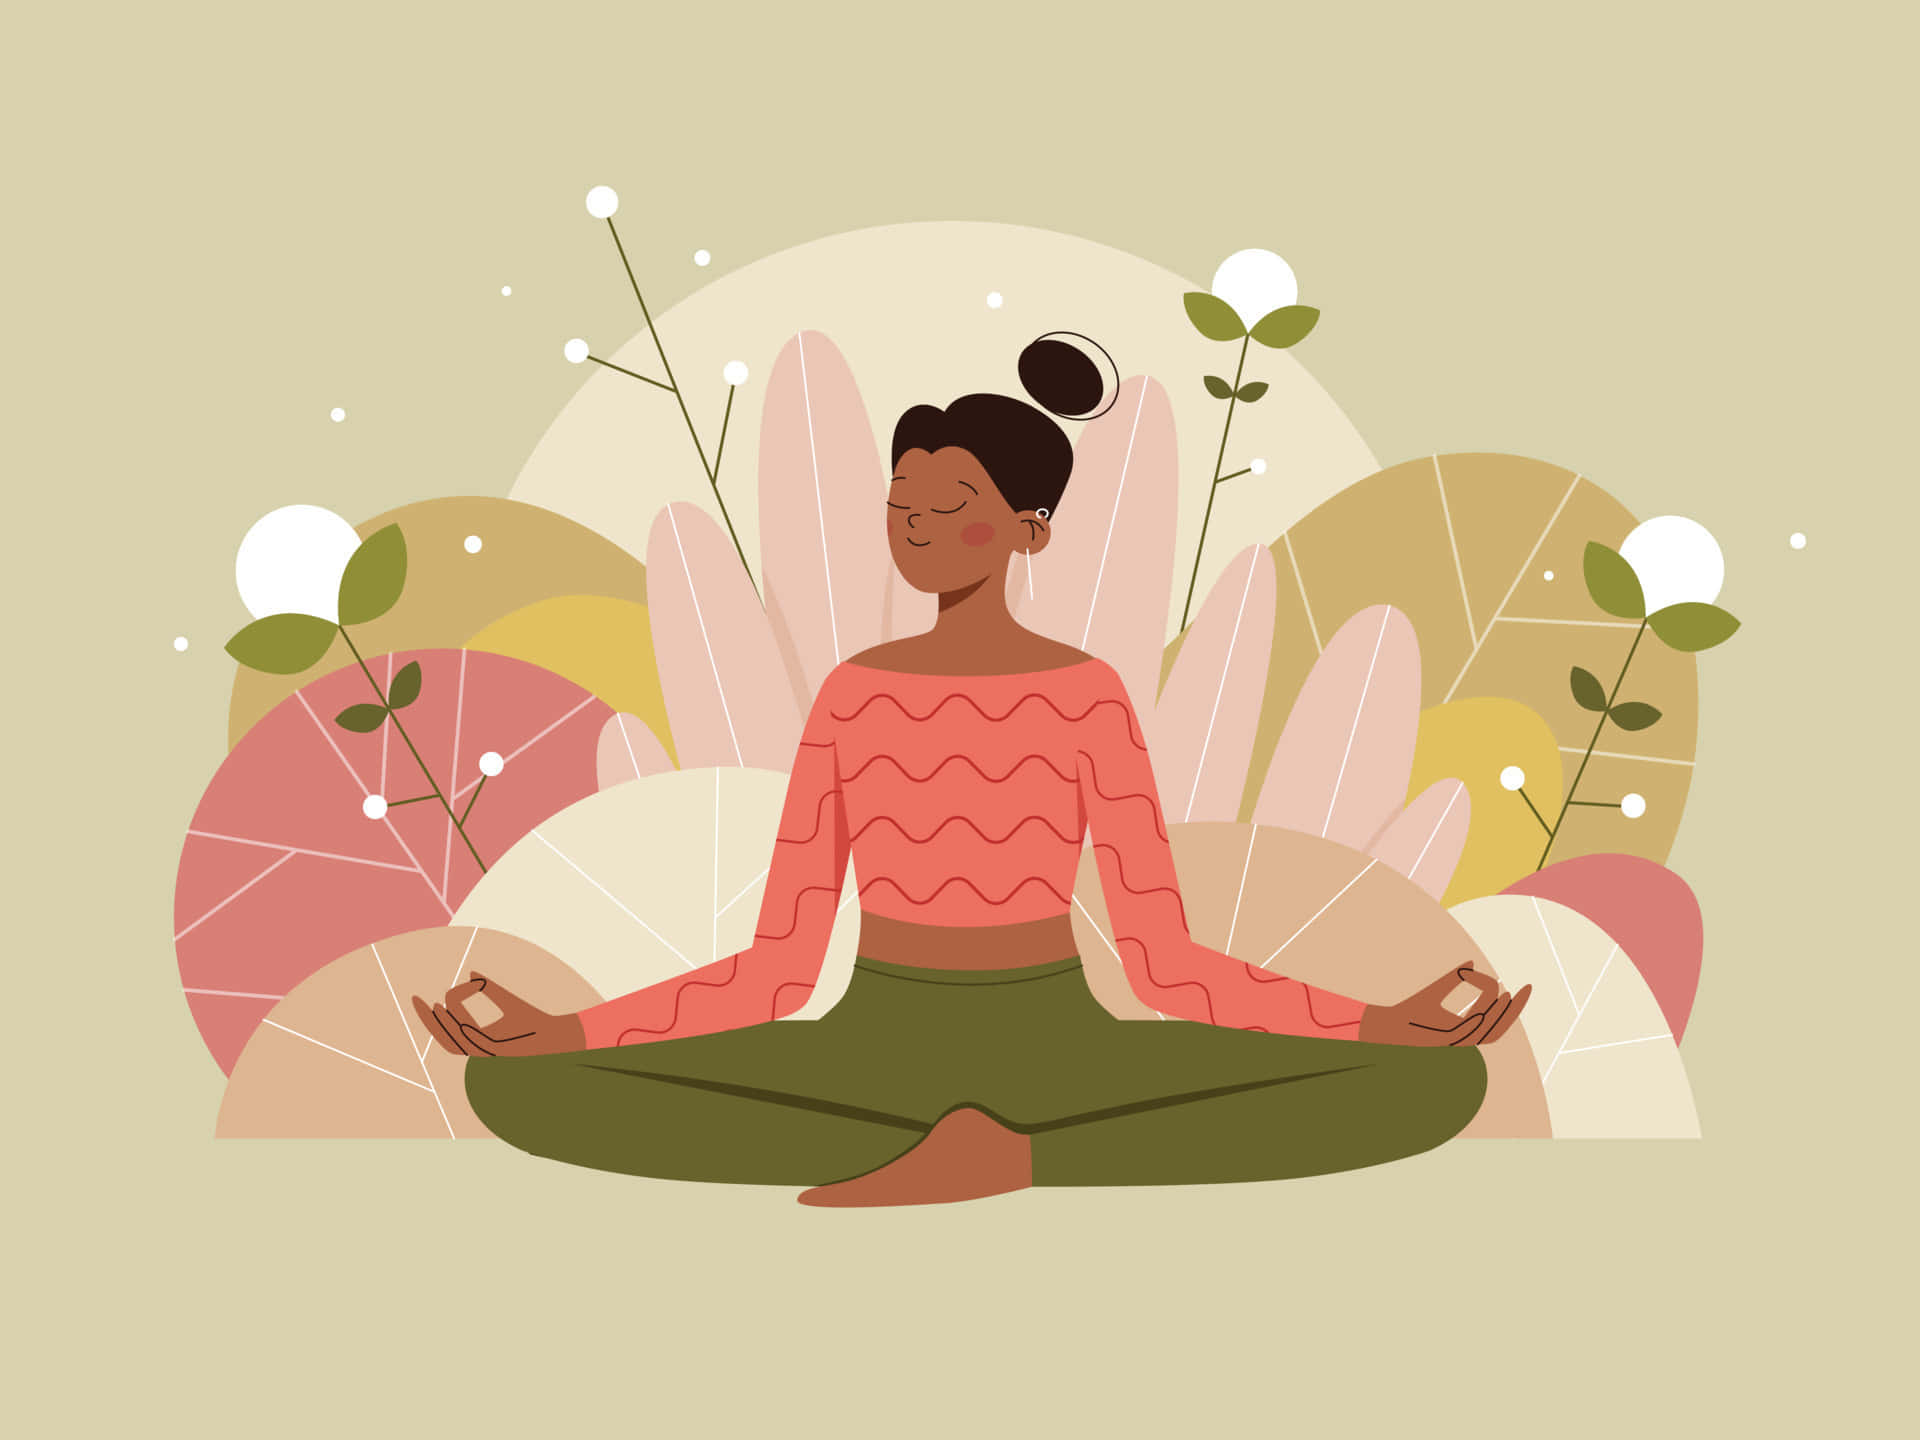 Find inner peace through meditation